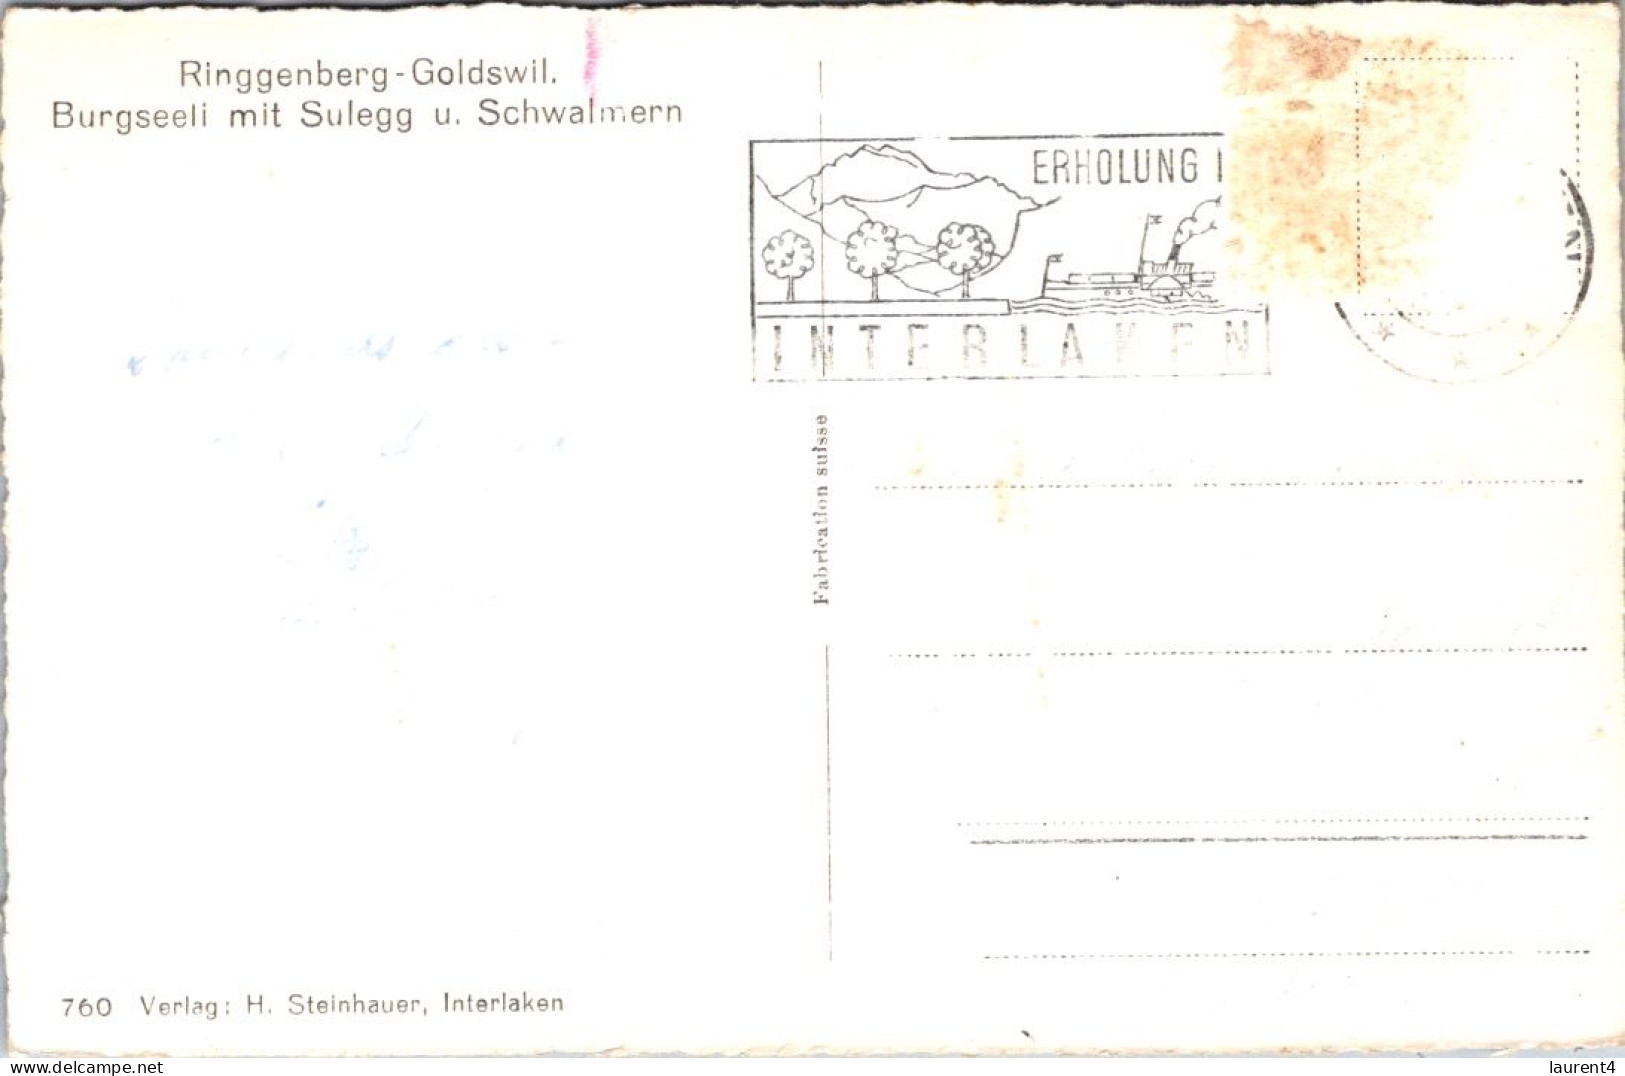 13-4-2024 (1 Z 46) VERY OLD - (posted) B/w - Switzerland - Ringgerberg-Goldwil - Ringgenberg